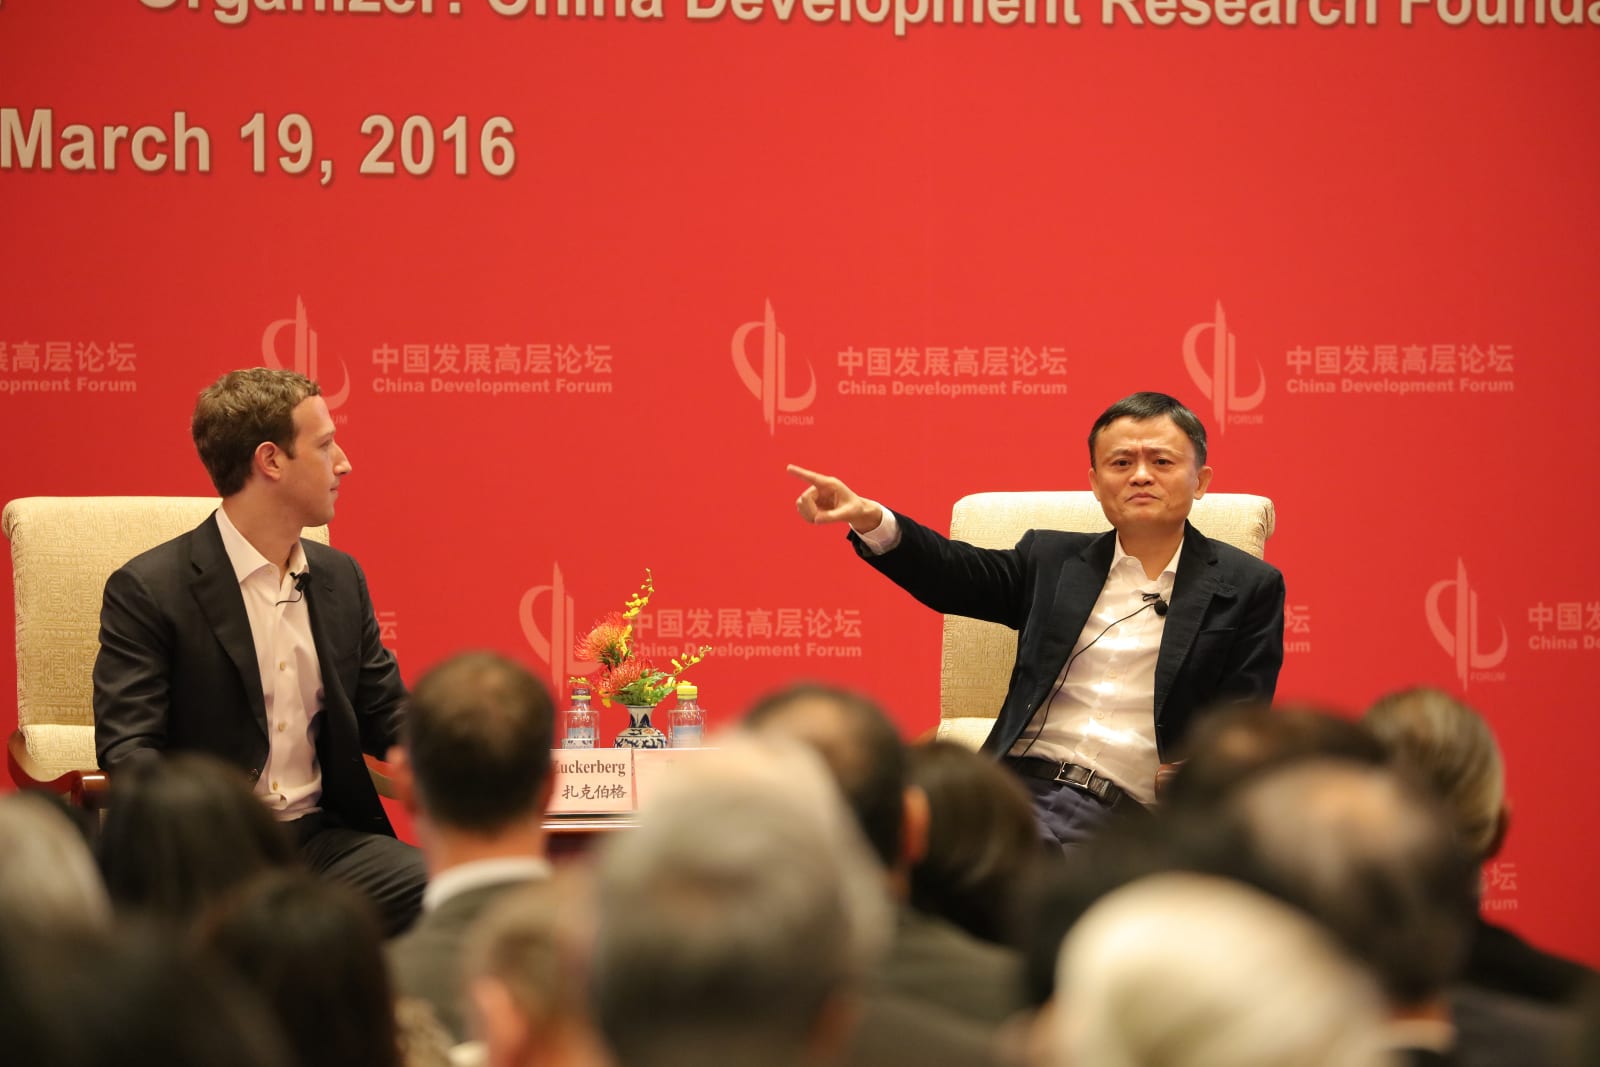 China Development Forum 2016 In Beijing